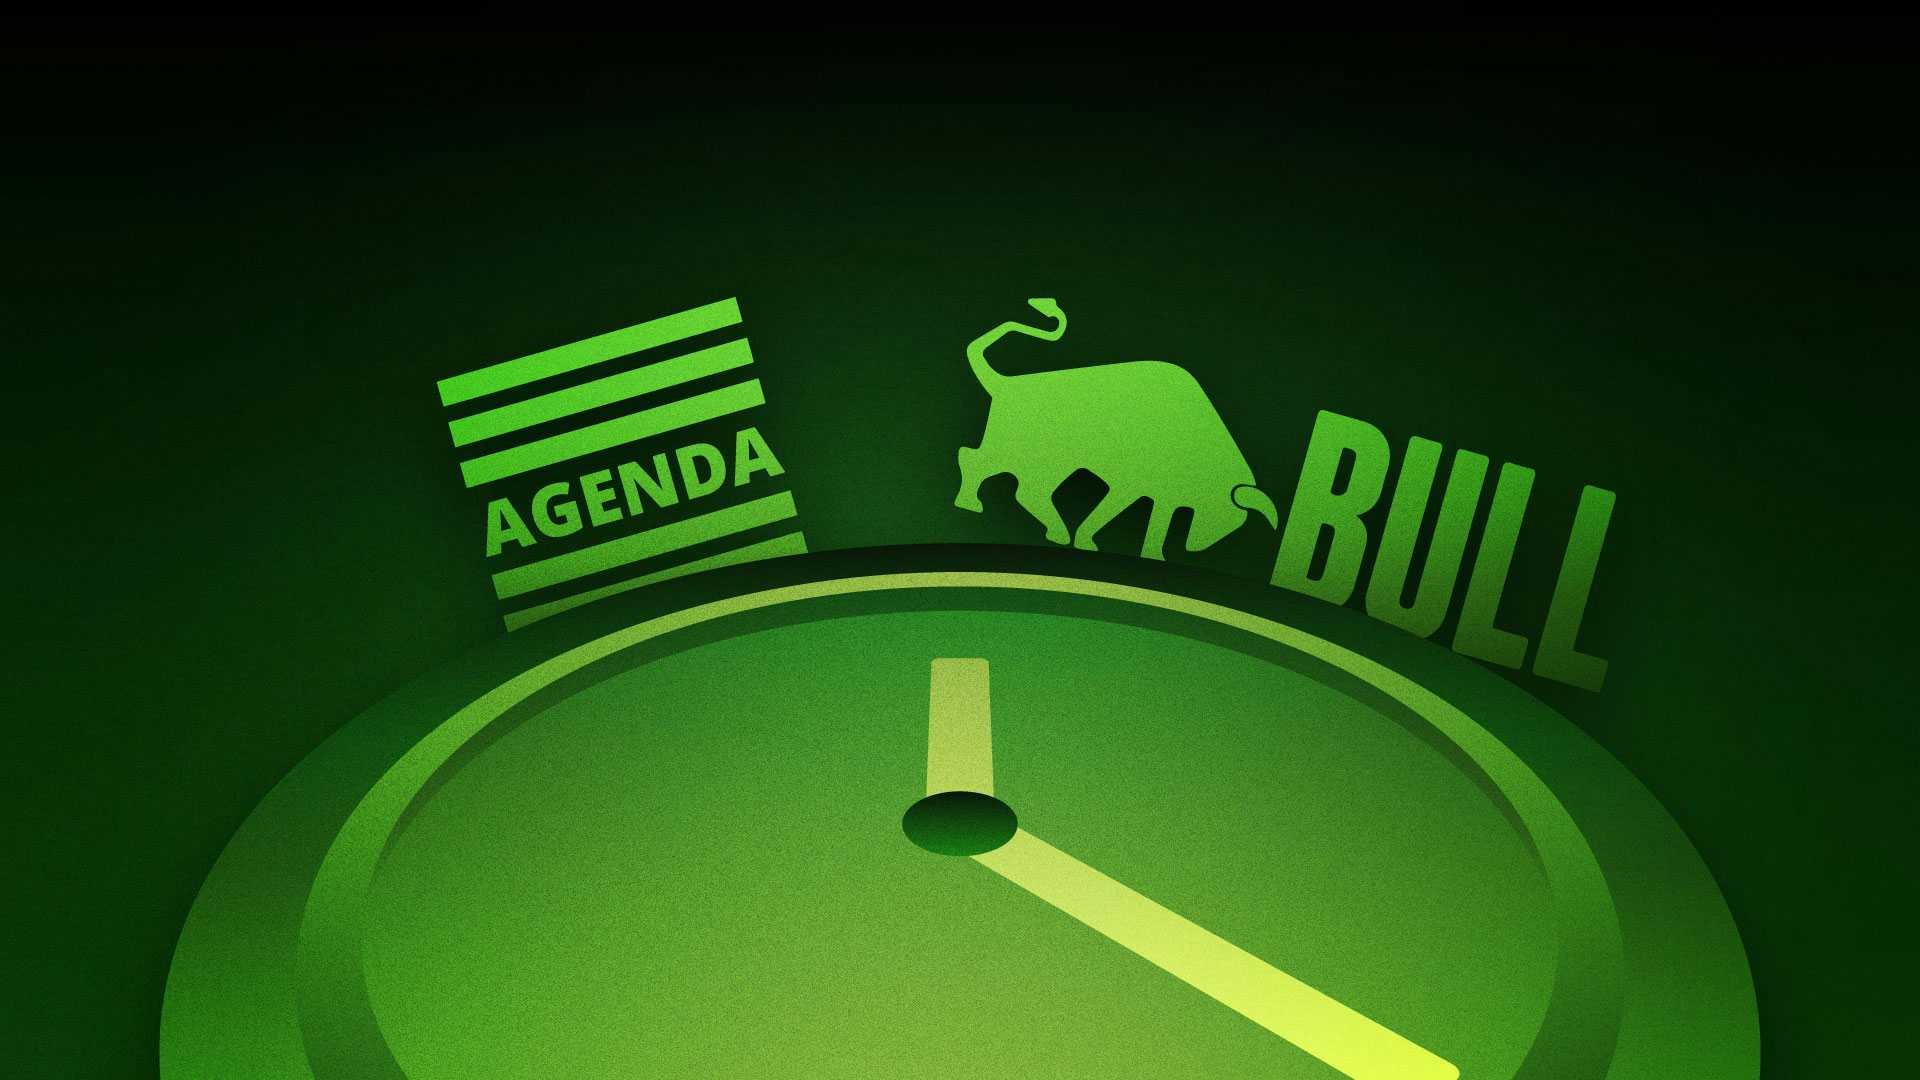 Job Schedulers for Node: Bull or Agenda?